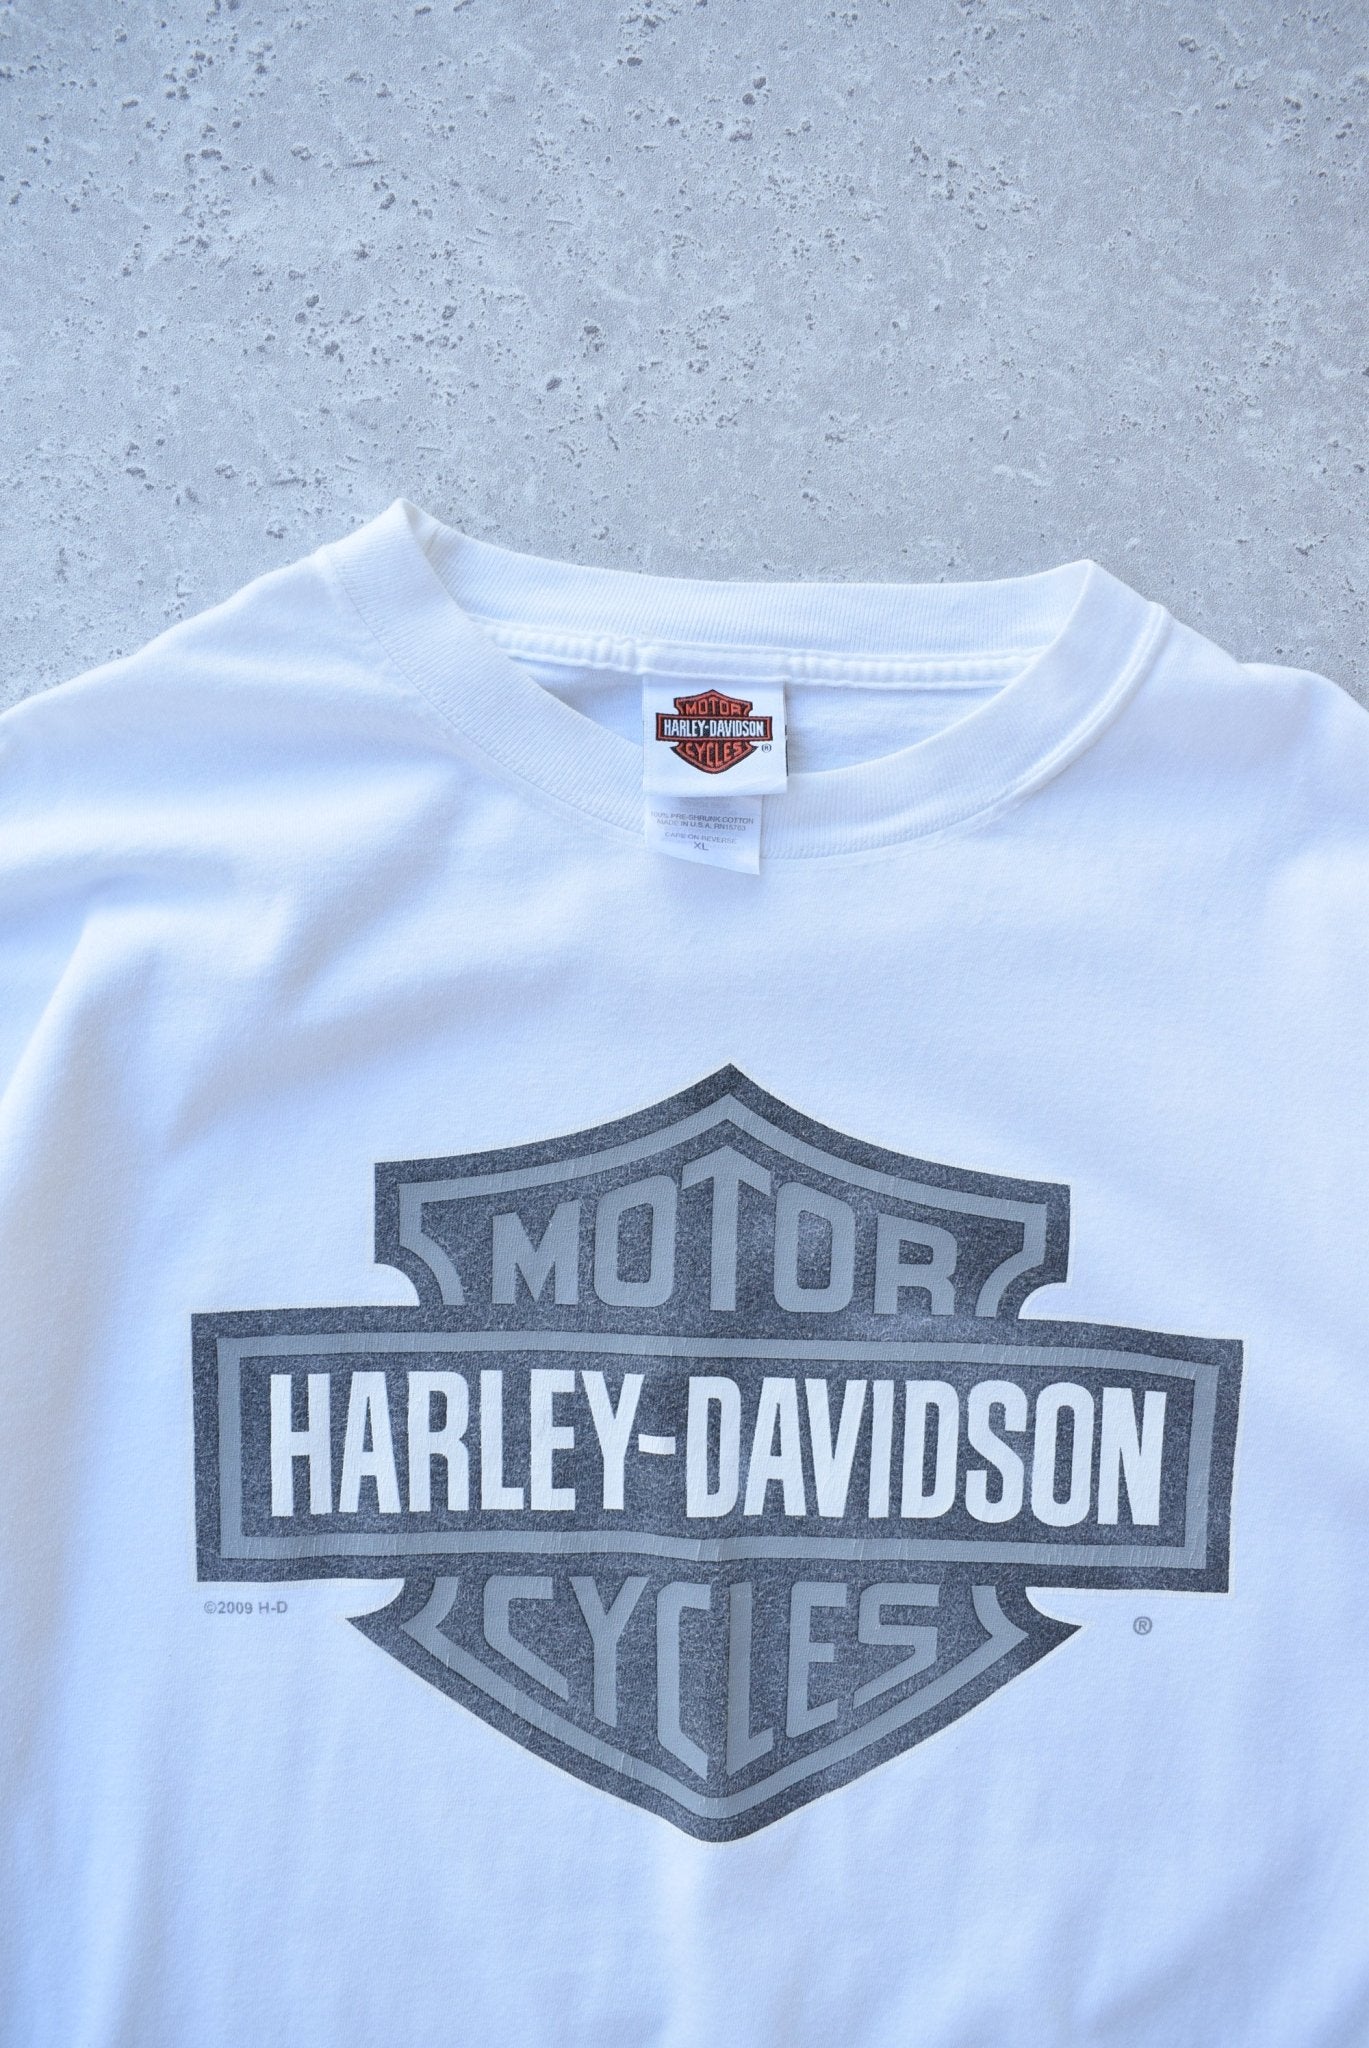 Vintage Harley Davidson Motorcycles Long Sleeve Tee (XL) - Retrospective Store